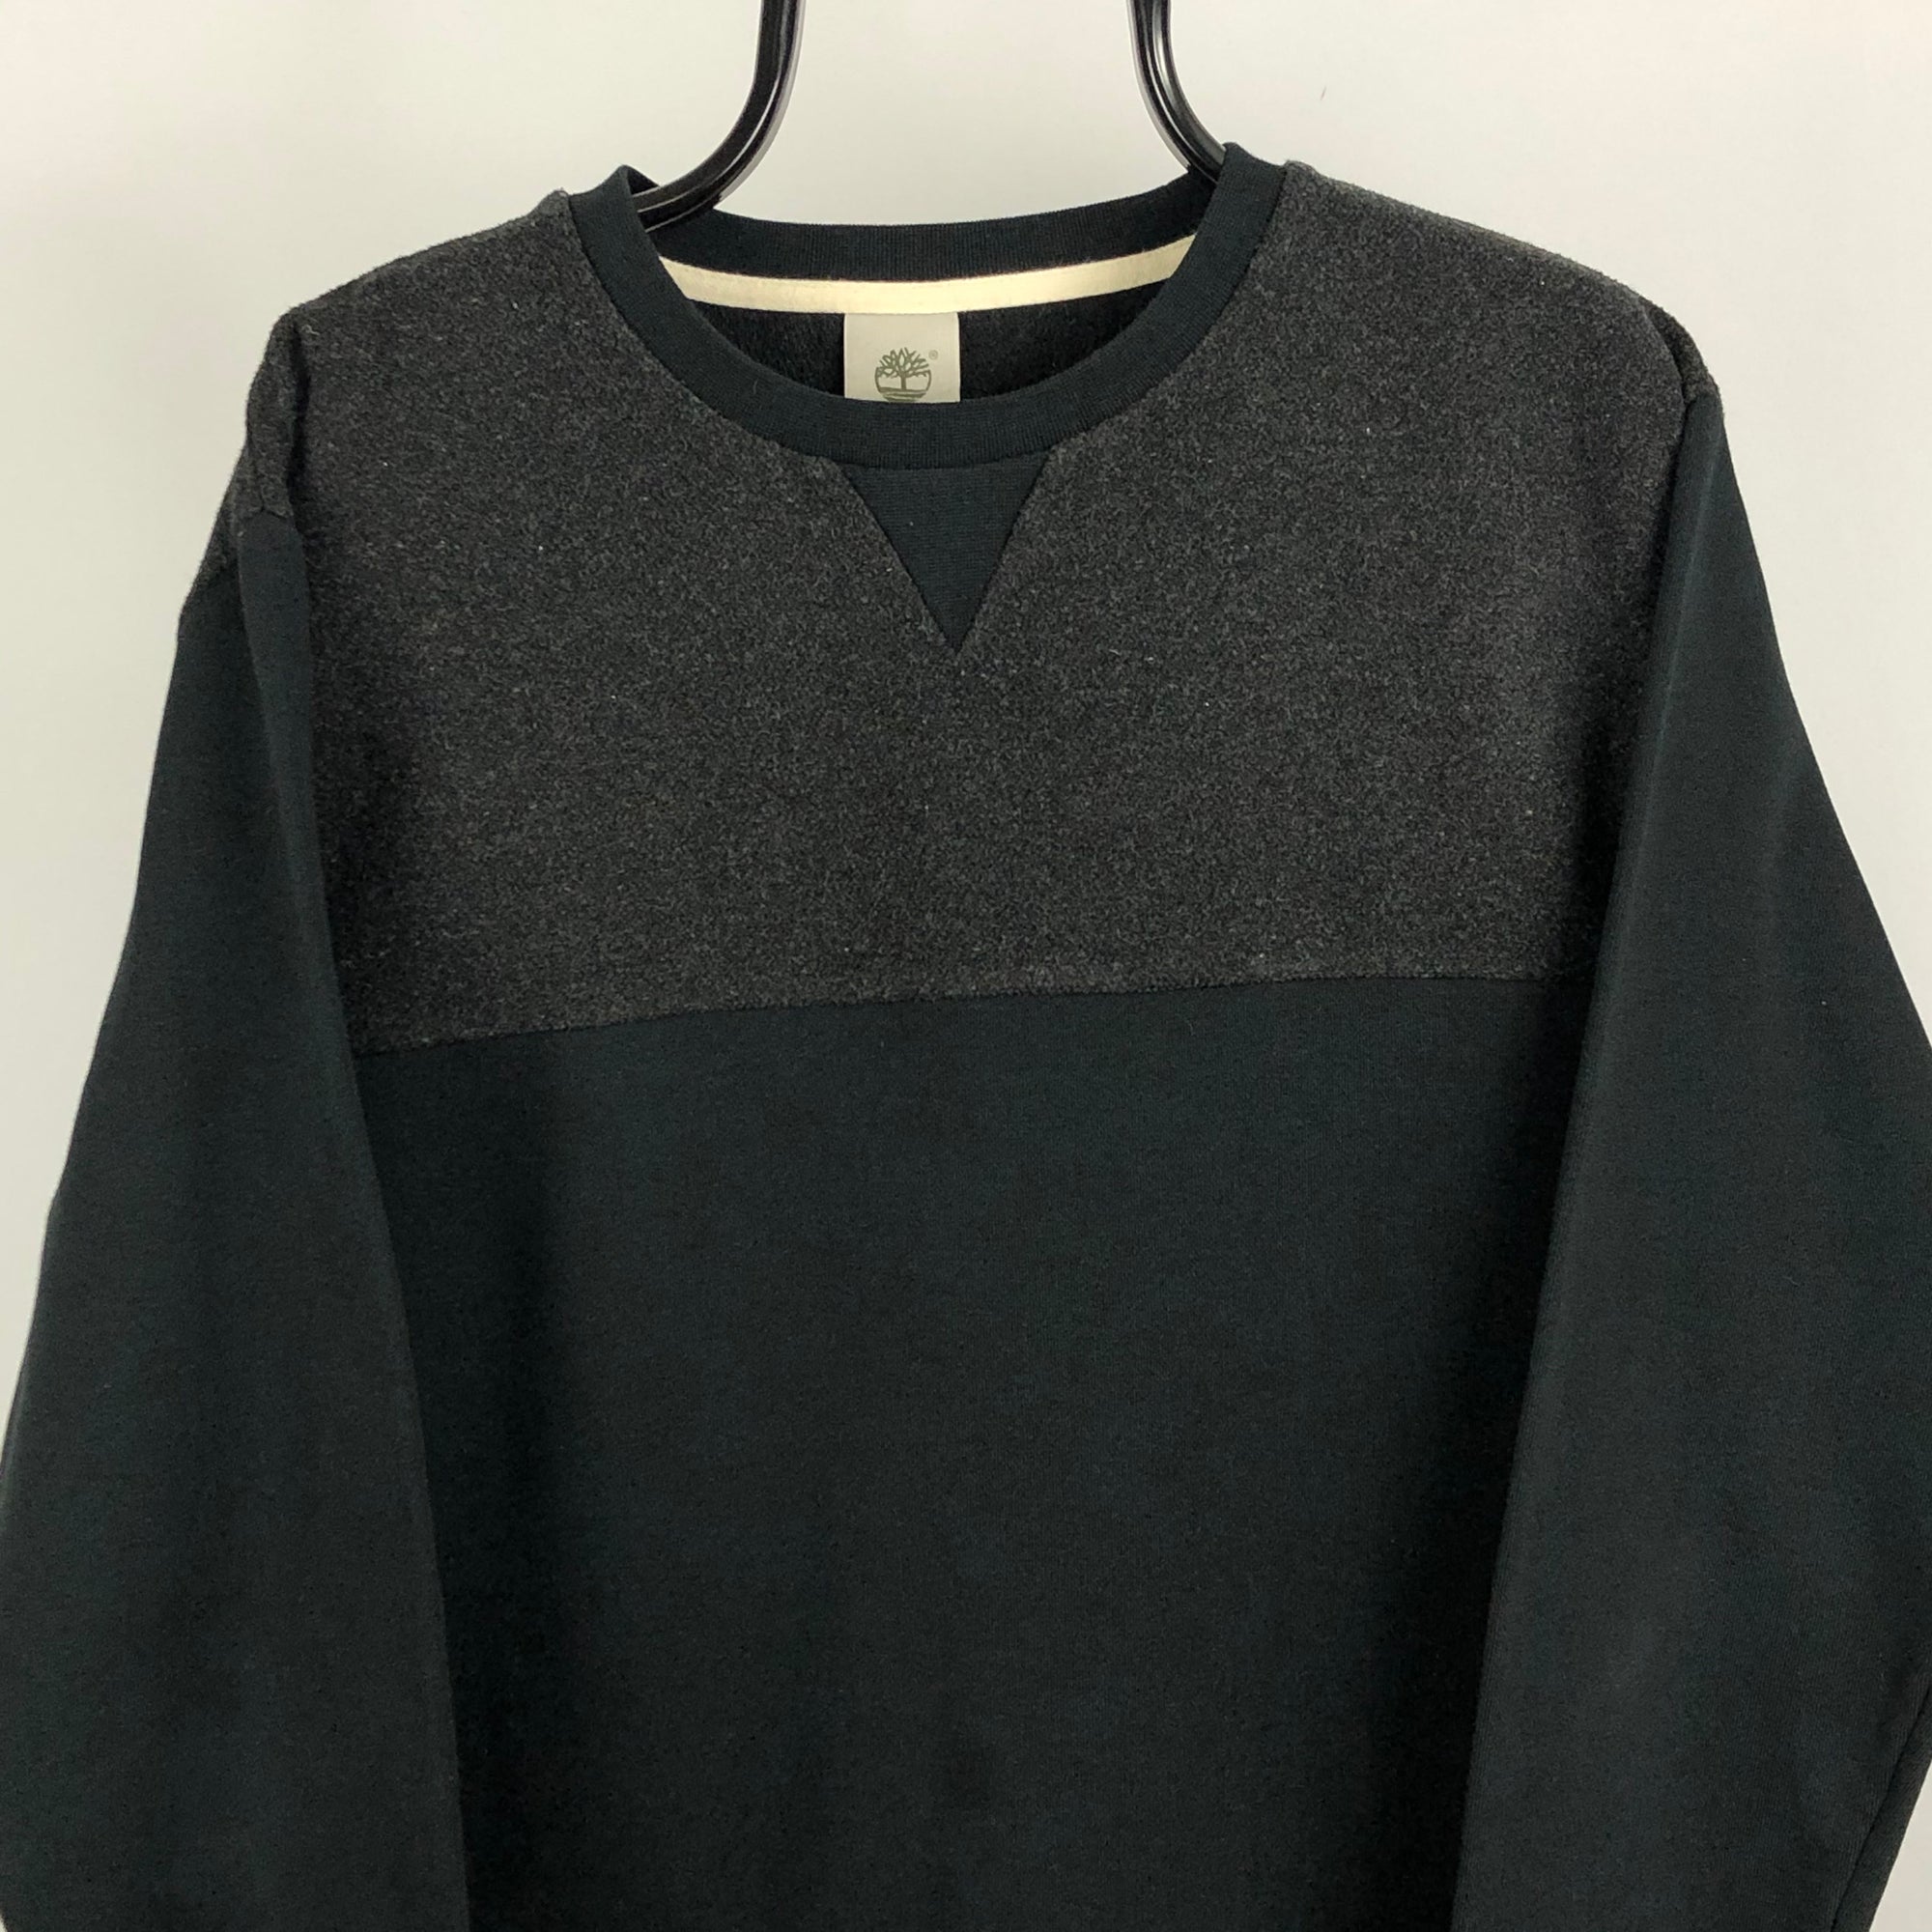 Timberland Sweatshirt With Wool Upper - Men's Large/Women's XL